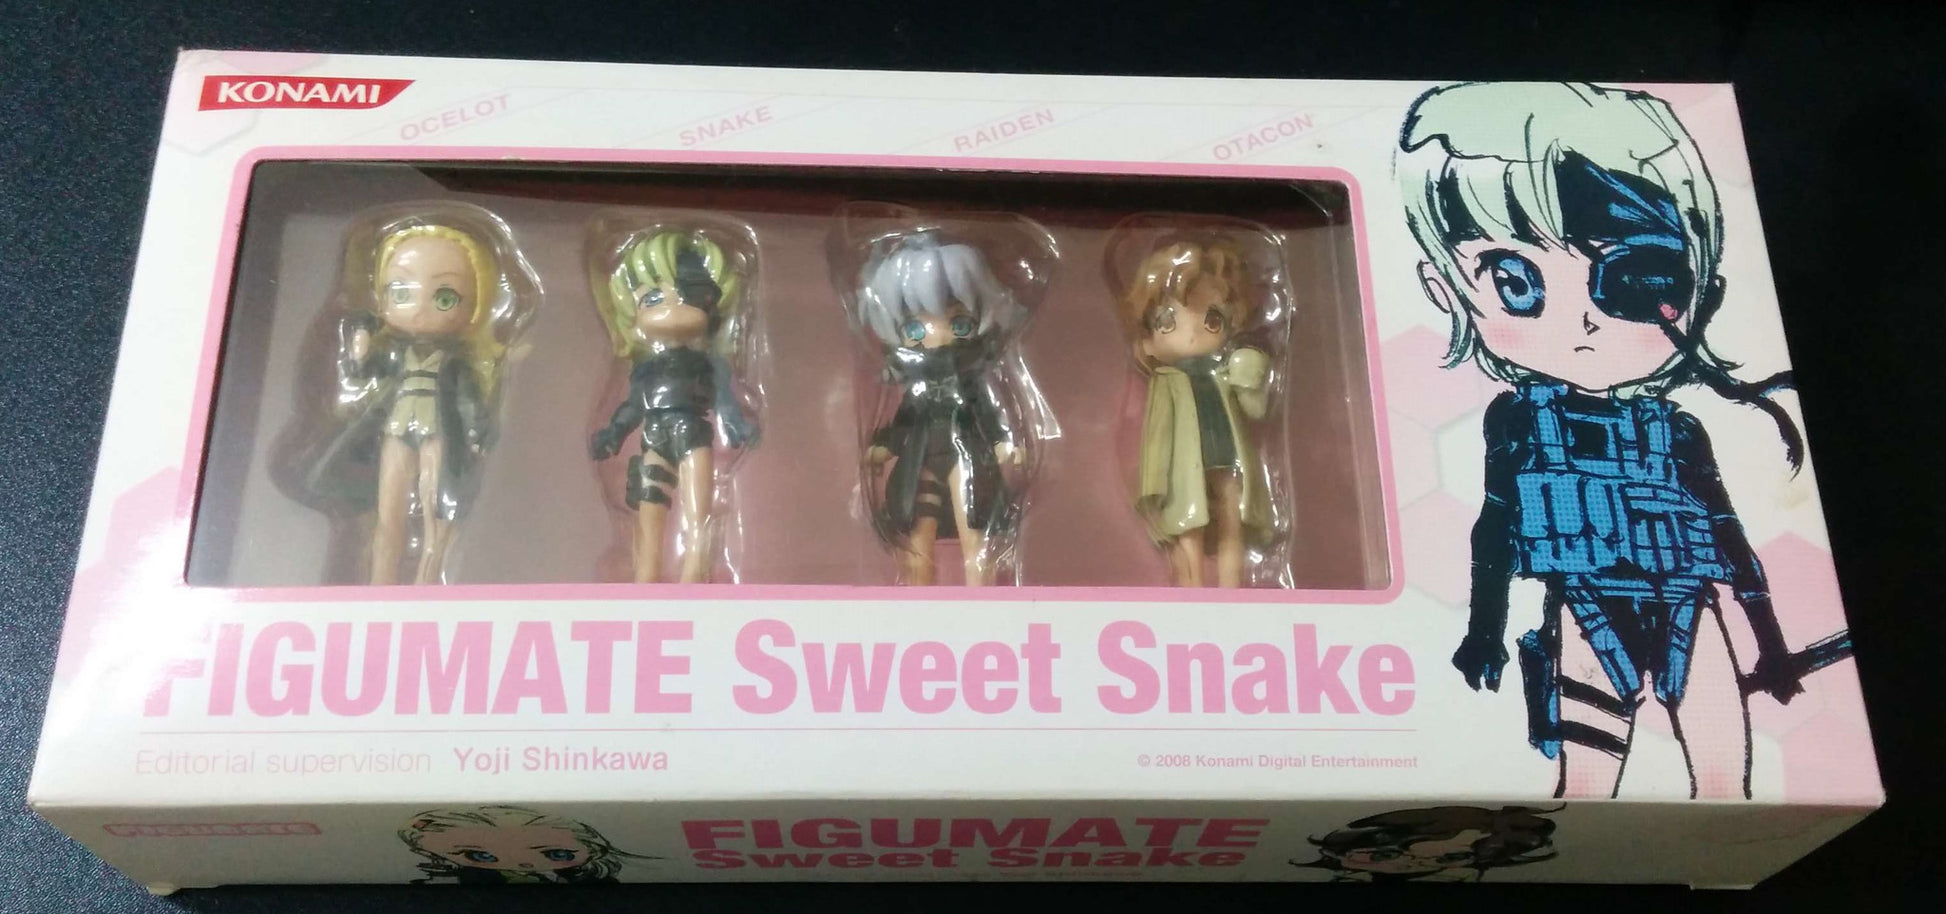 Konami Figumate Metal Gear Solid 4 MGS4 Sweet Snake 4 Trading Collection Figure Set - Lavits Figure
